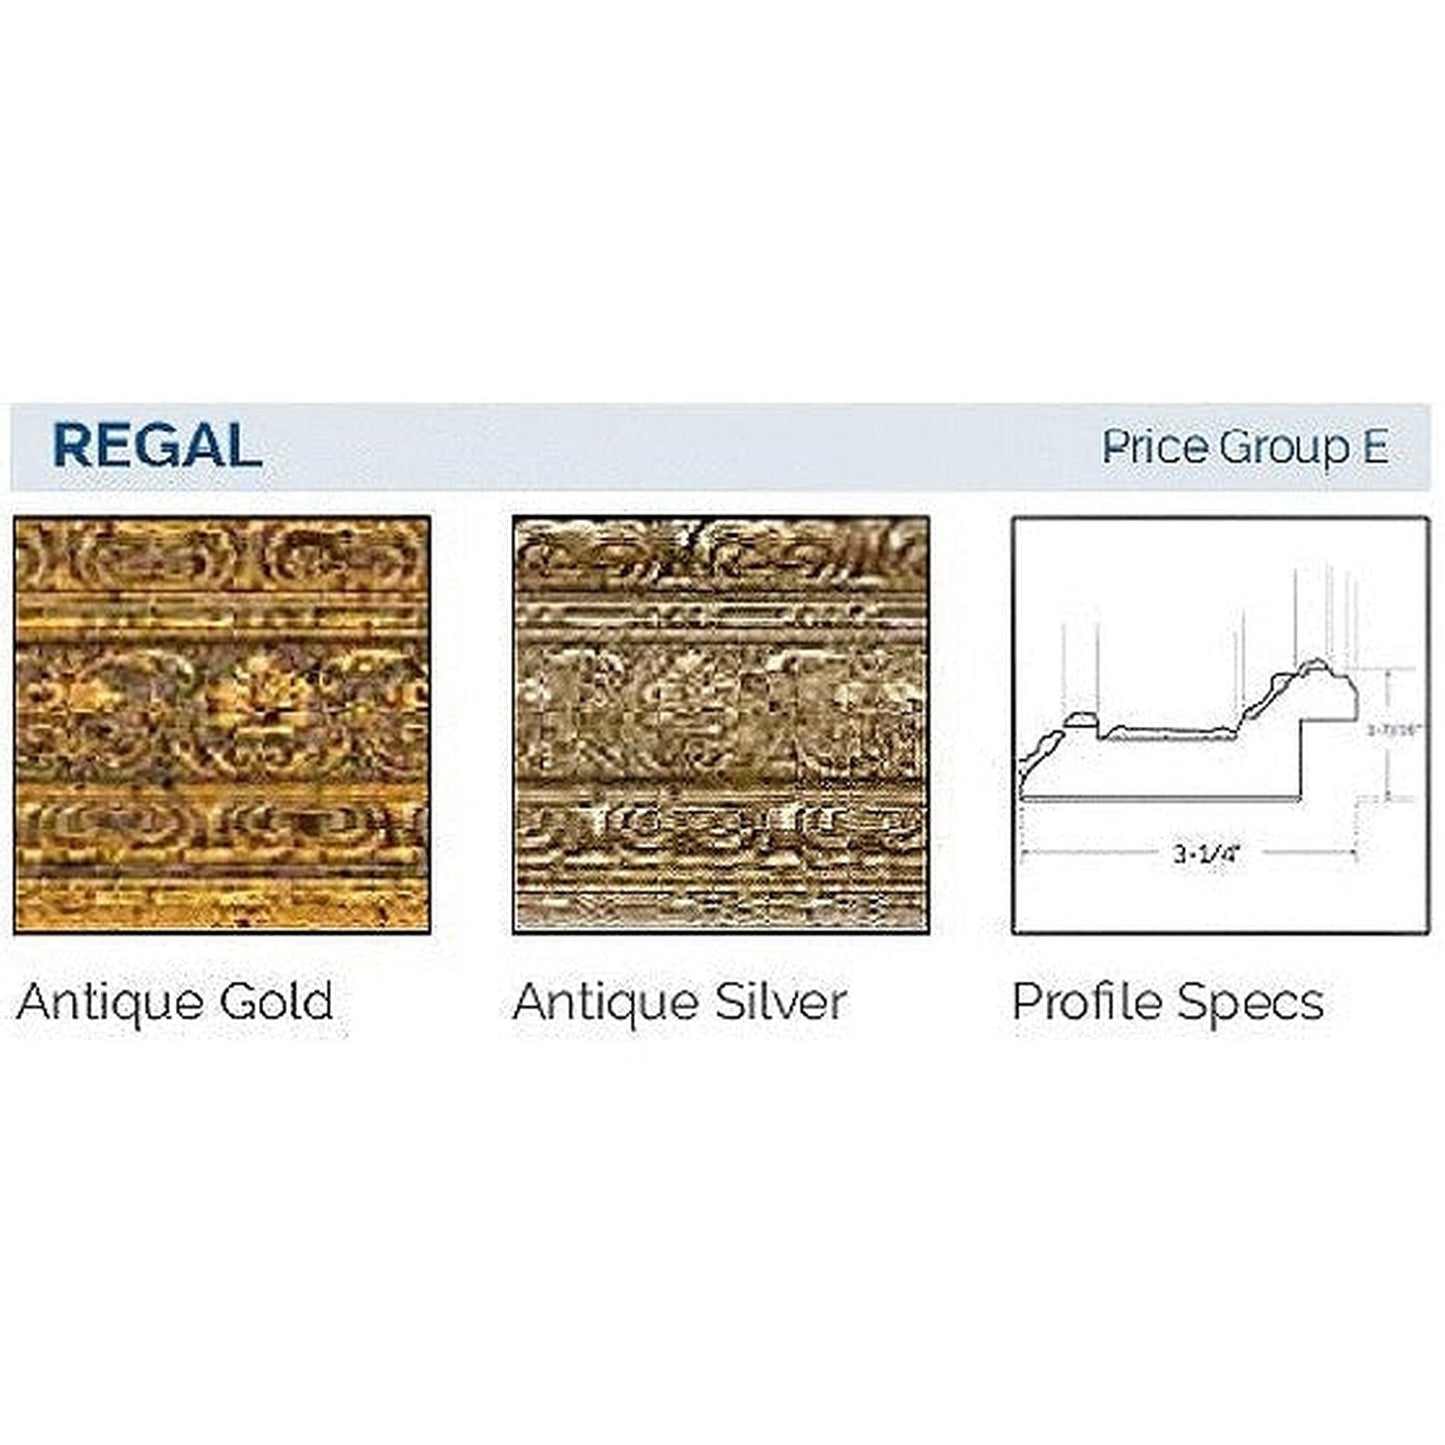 Afina Signature 24" x 30" Regal Antique Gold Recessed Reversible Hinged Single Door Medicine Cabinet With Beveled Edge Mirror